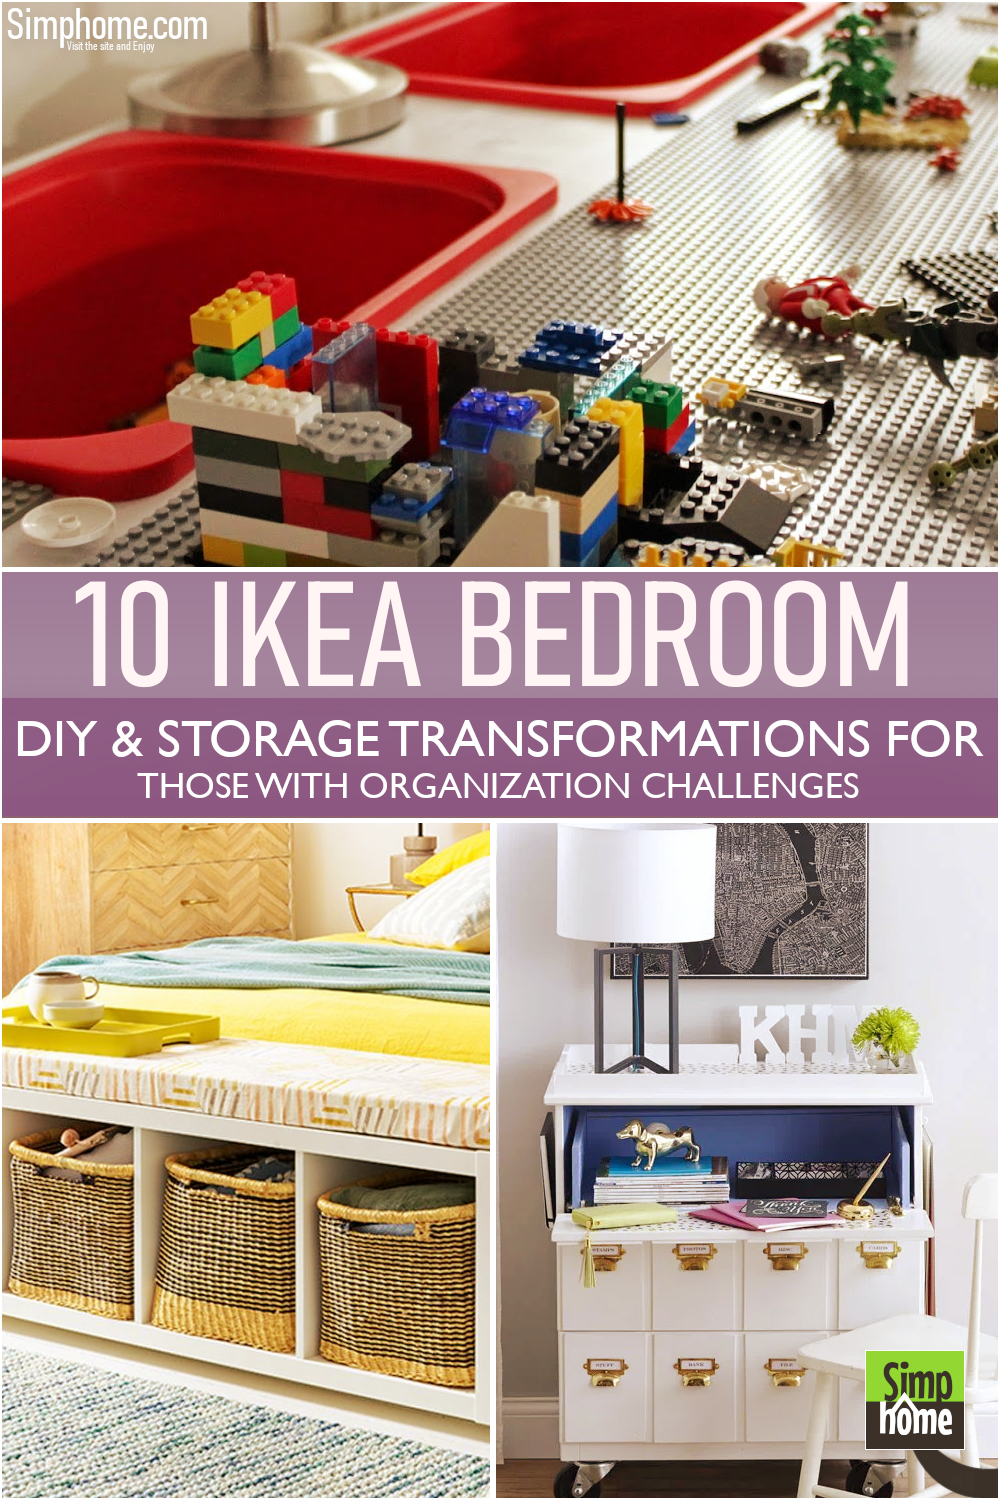 10 IKEA Bedroom Storage Transformation for Small Room via Simphome.com